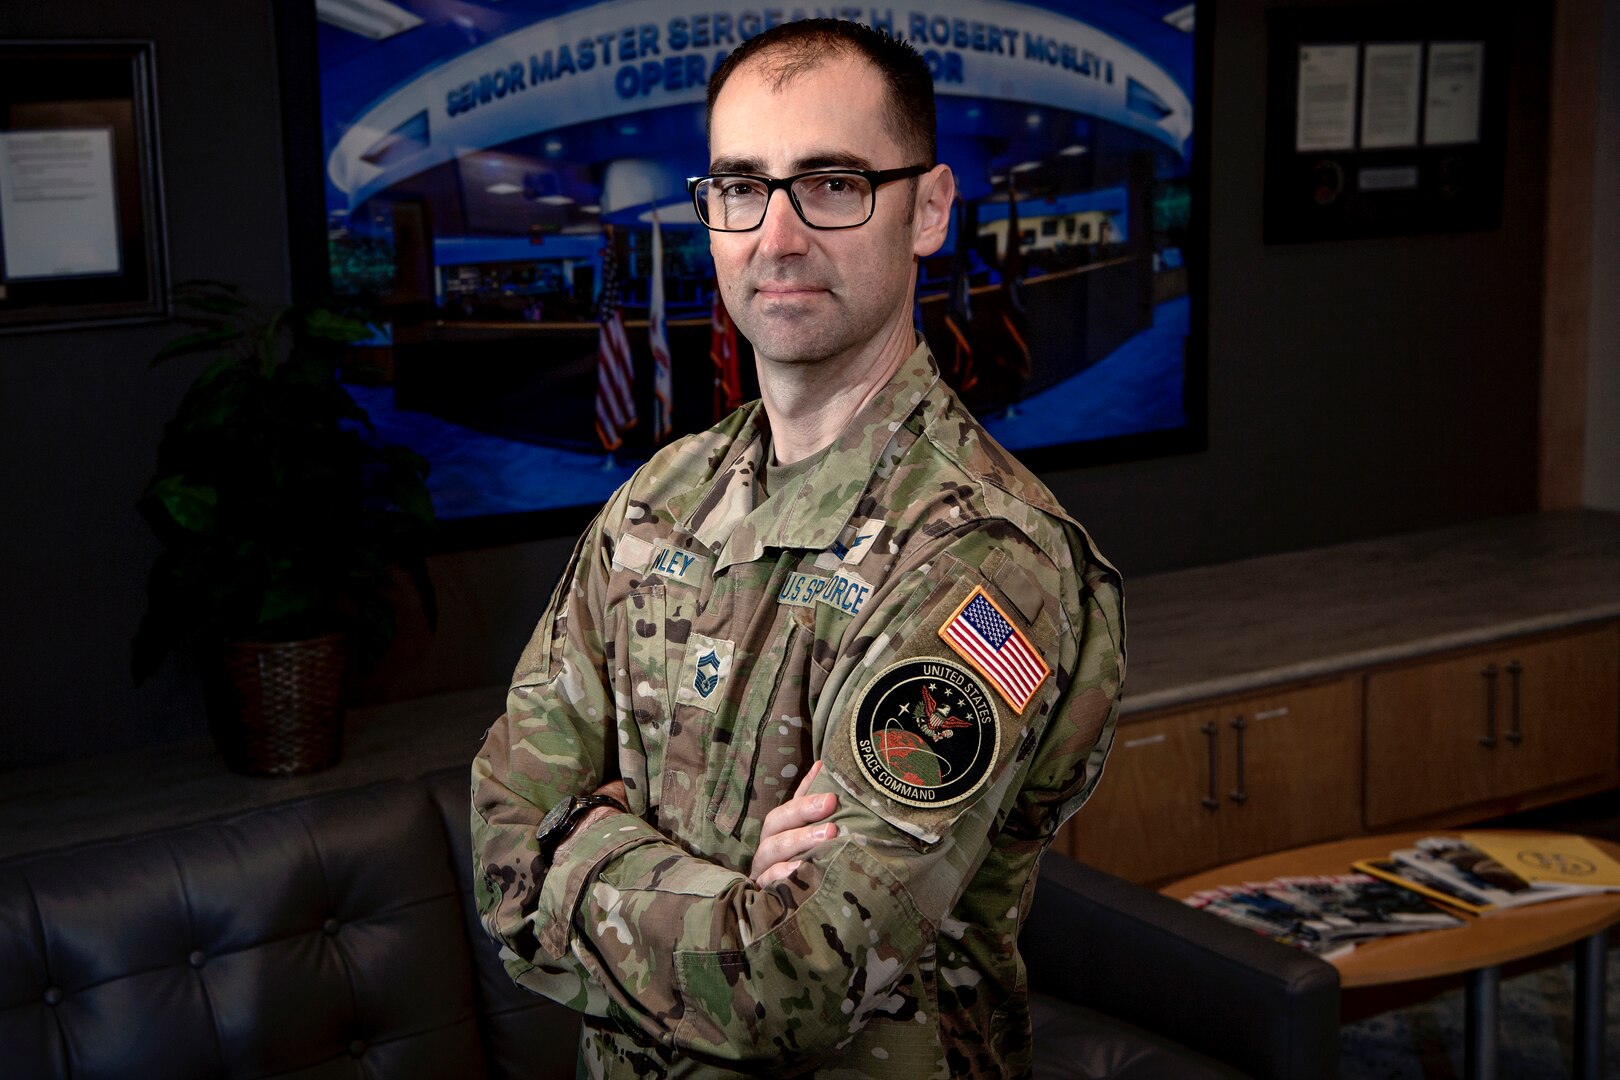 Military man poses in uniform